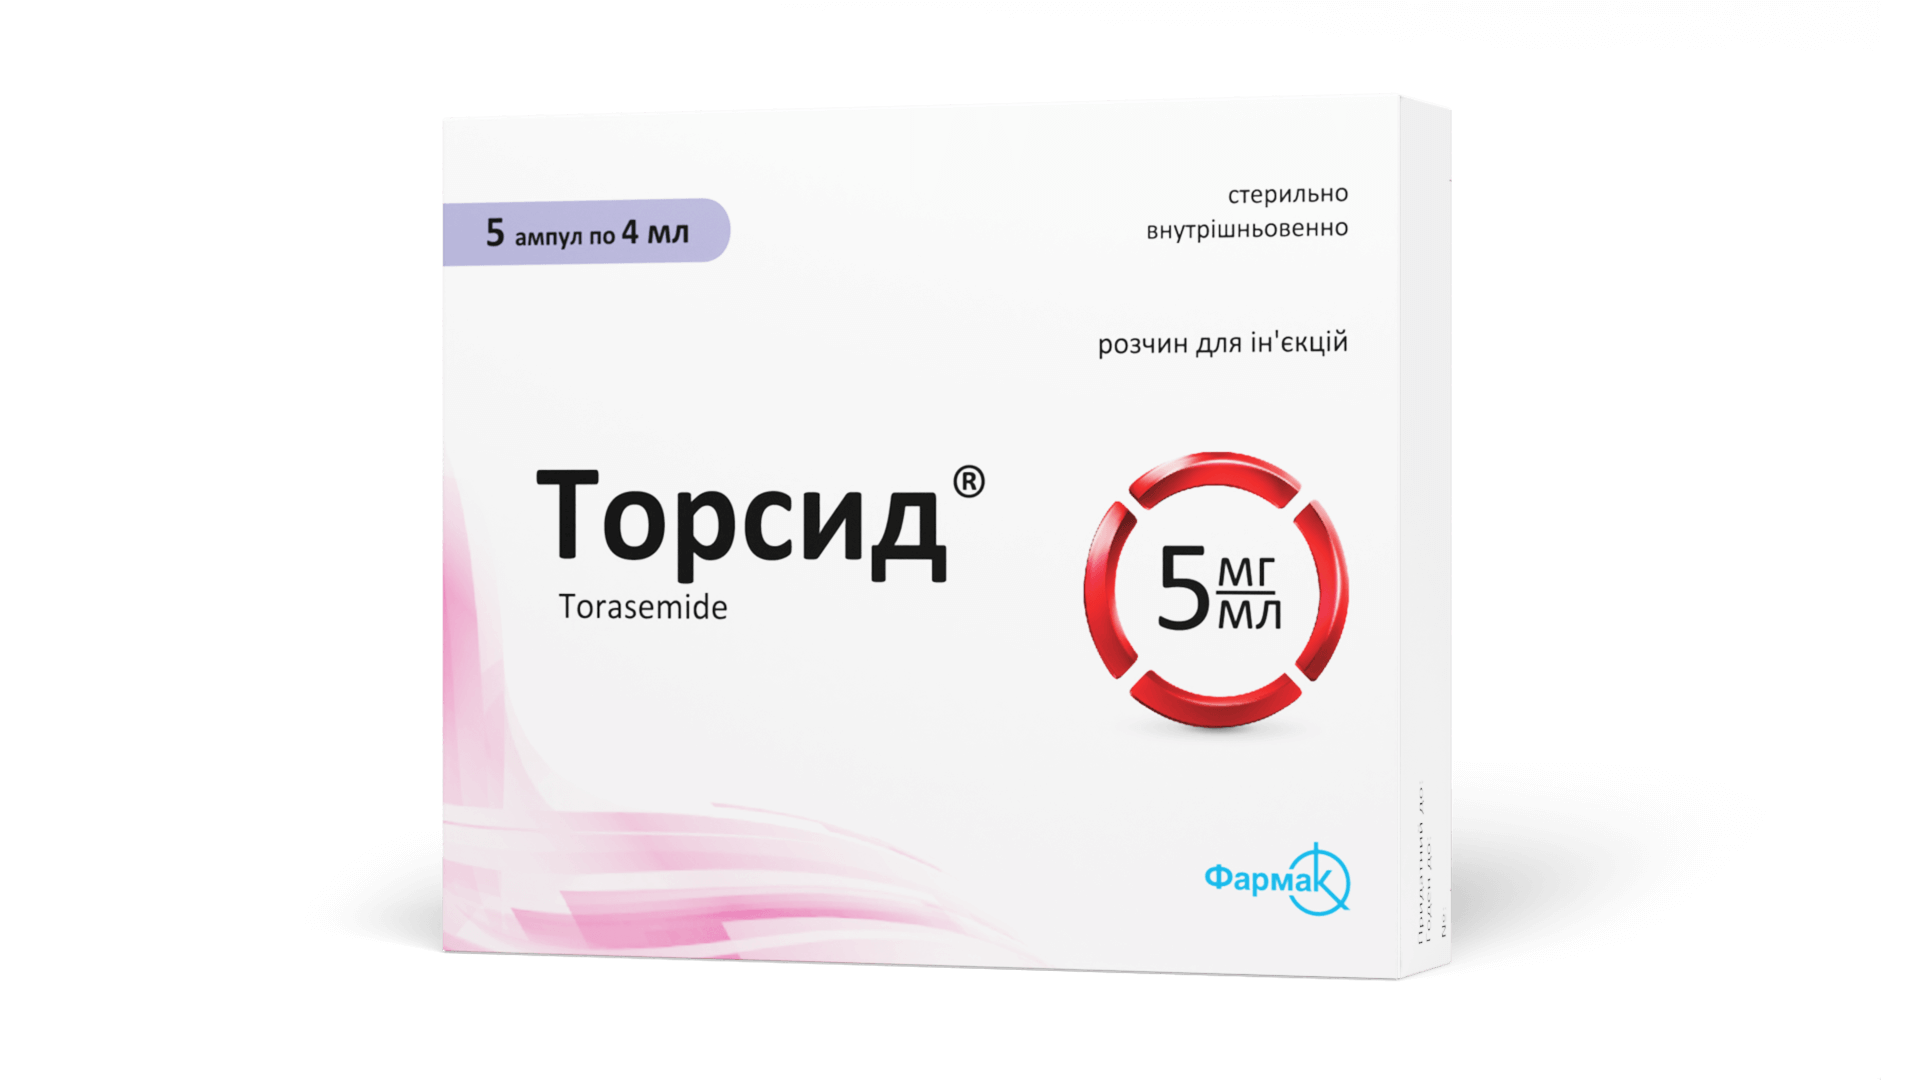 Торсид® (раствор) (3)